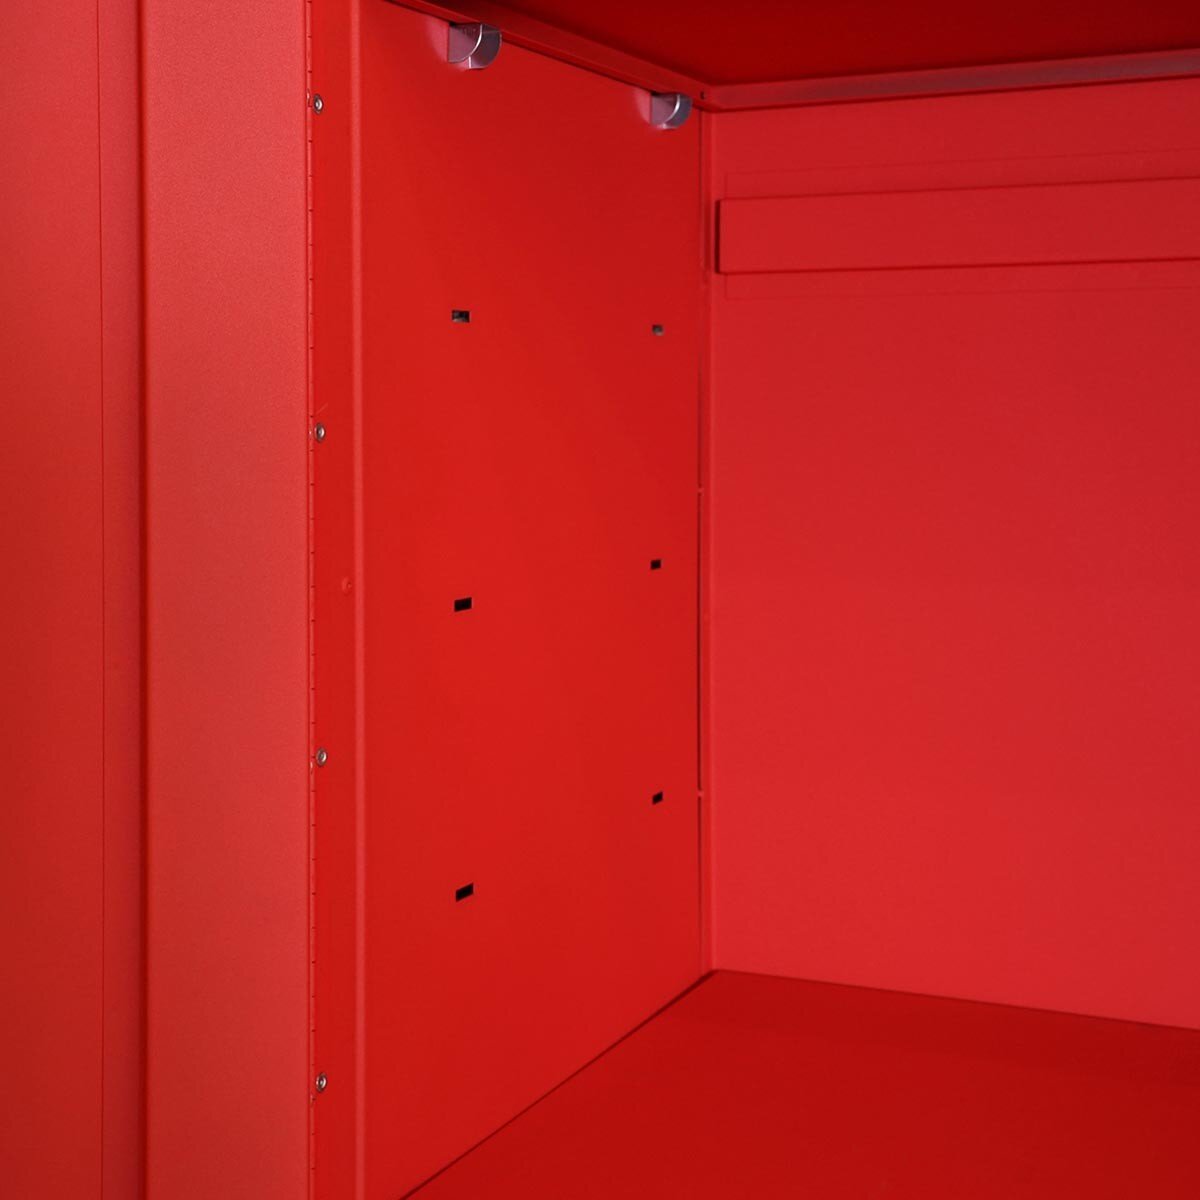 CSPS 8件組系統櫃組 1.0公釐 紅砂 限配送至花蓮、台東